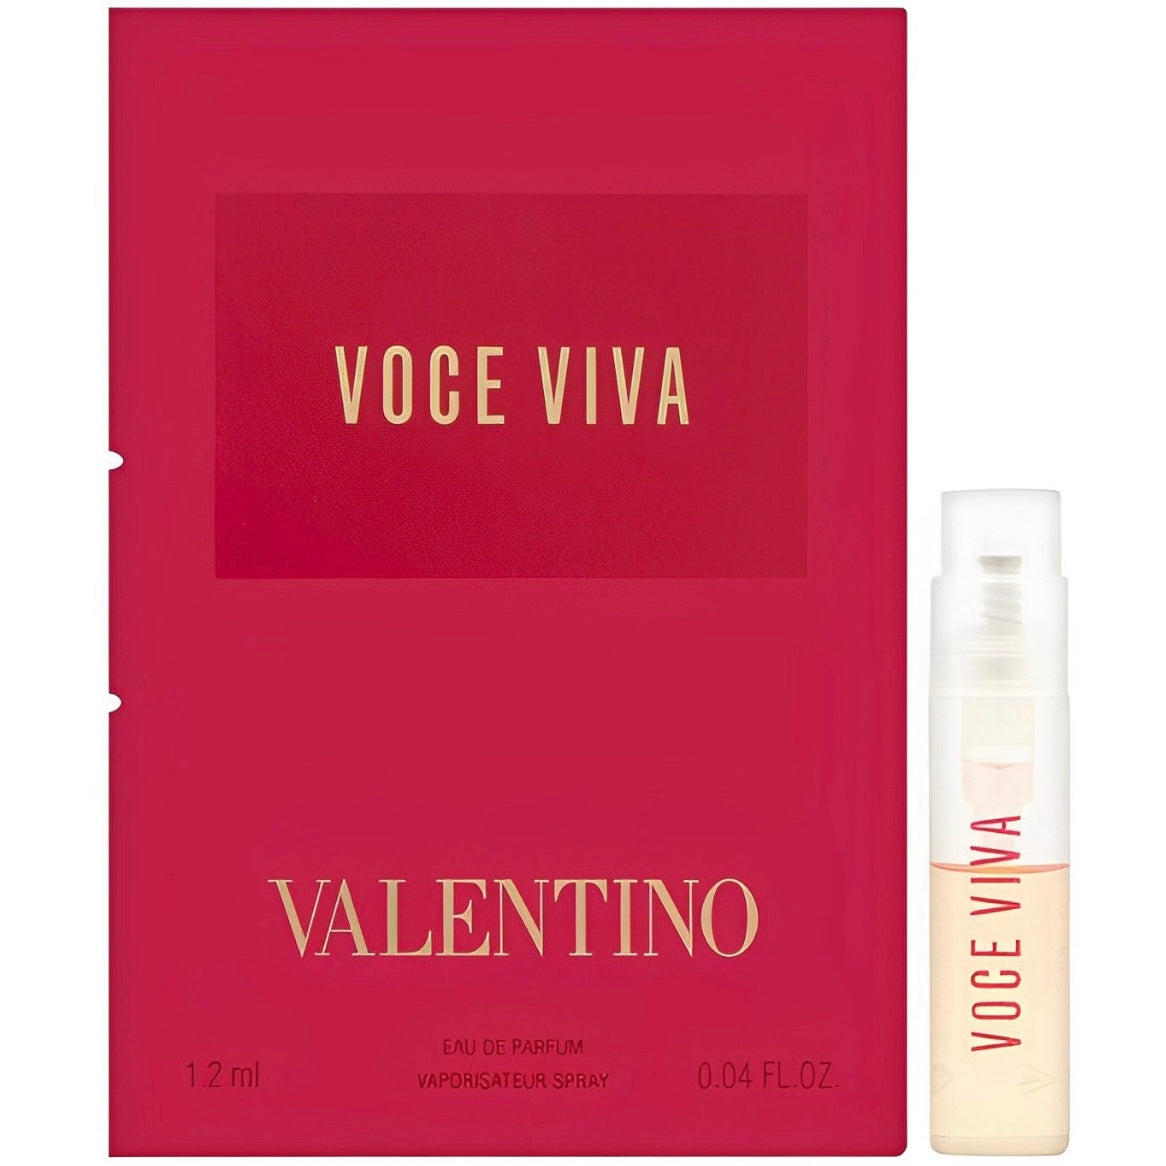 Voce Viva Eau de Parfum Sample-Valentino